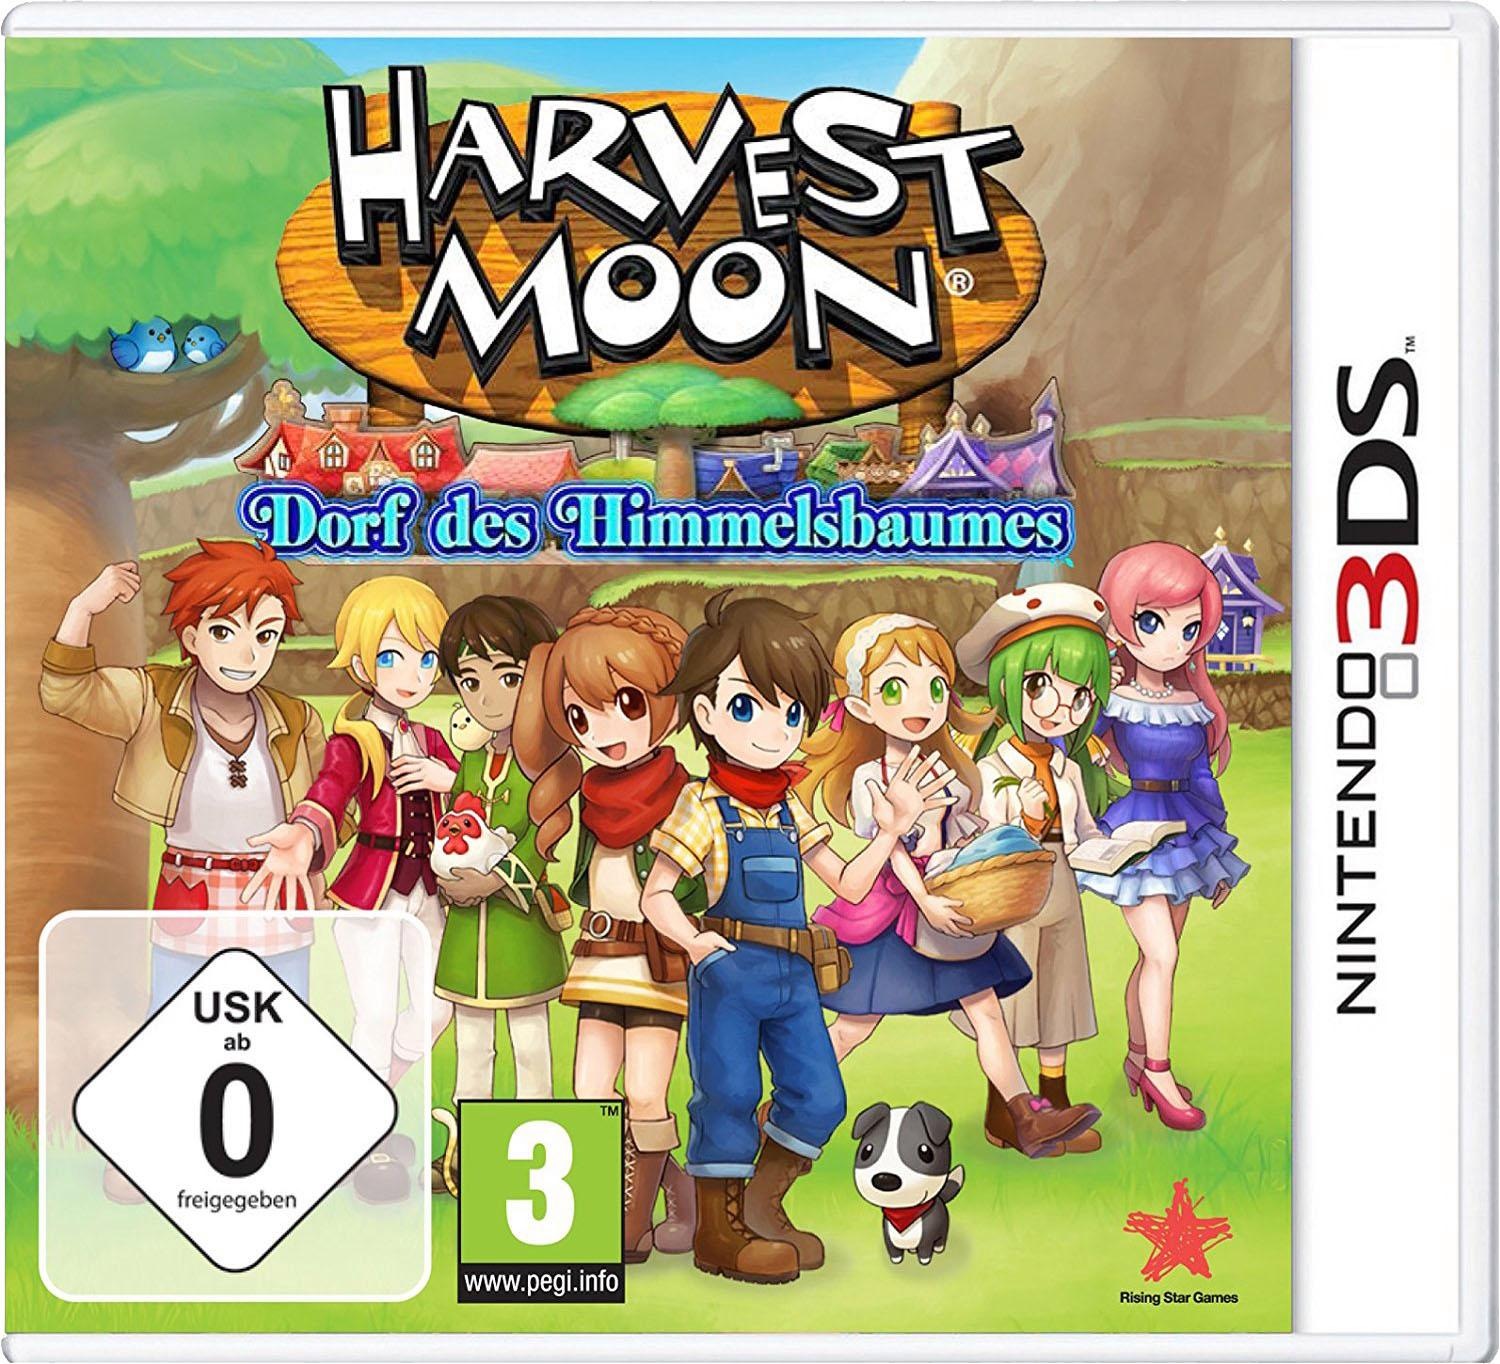 Spielesoftware »Harvest Moon: Dorf des Himmelbaumes«, Nintendo 3DS, Software Pyramide